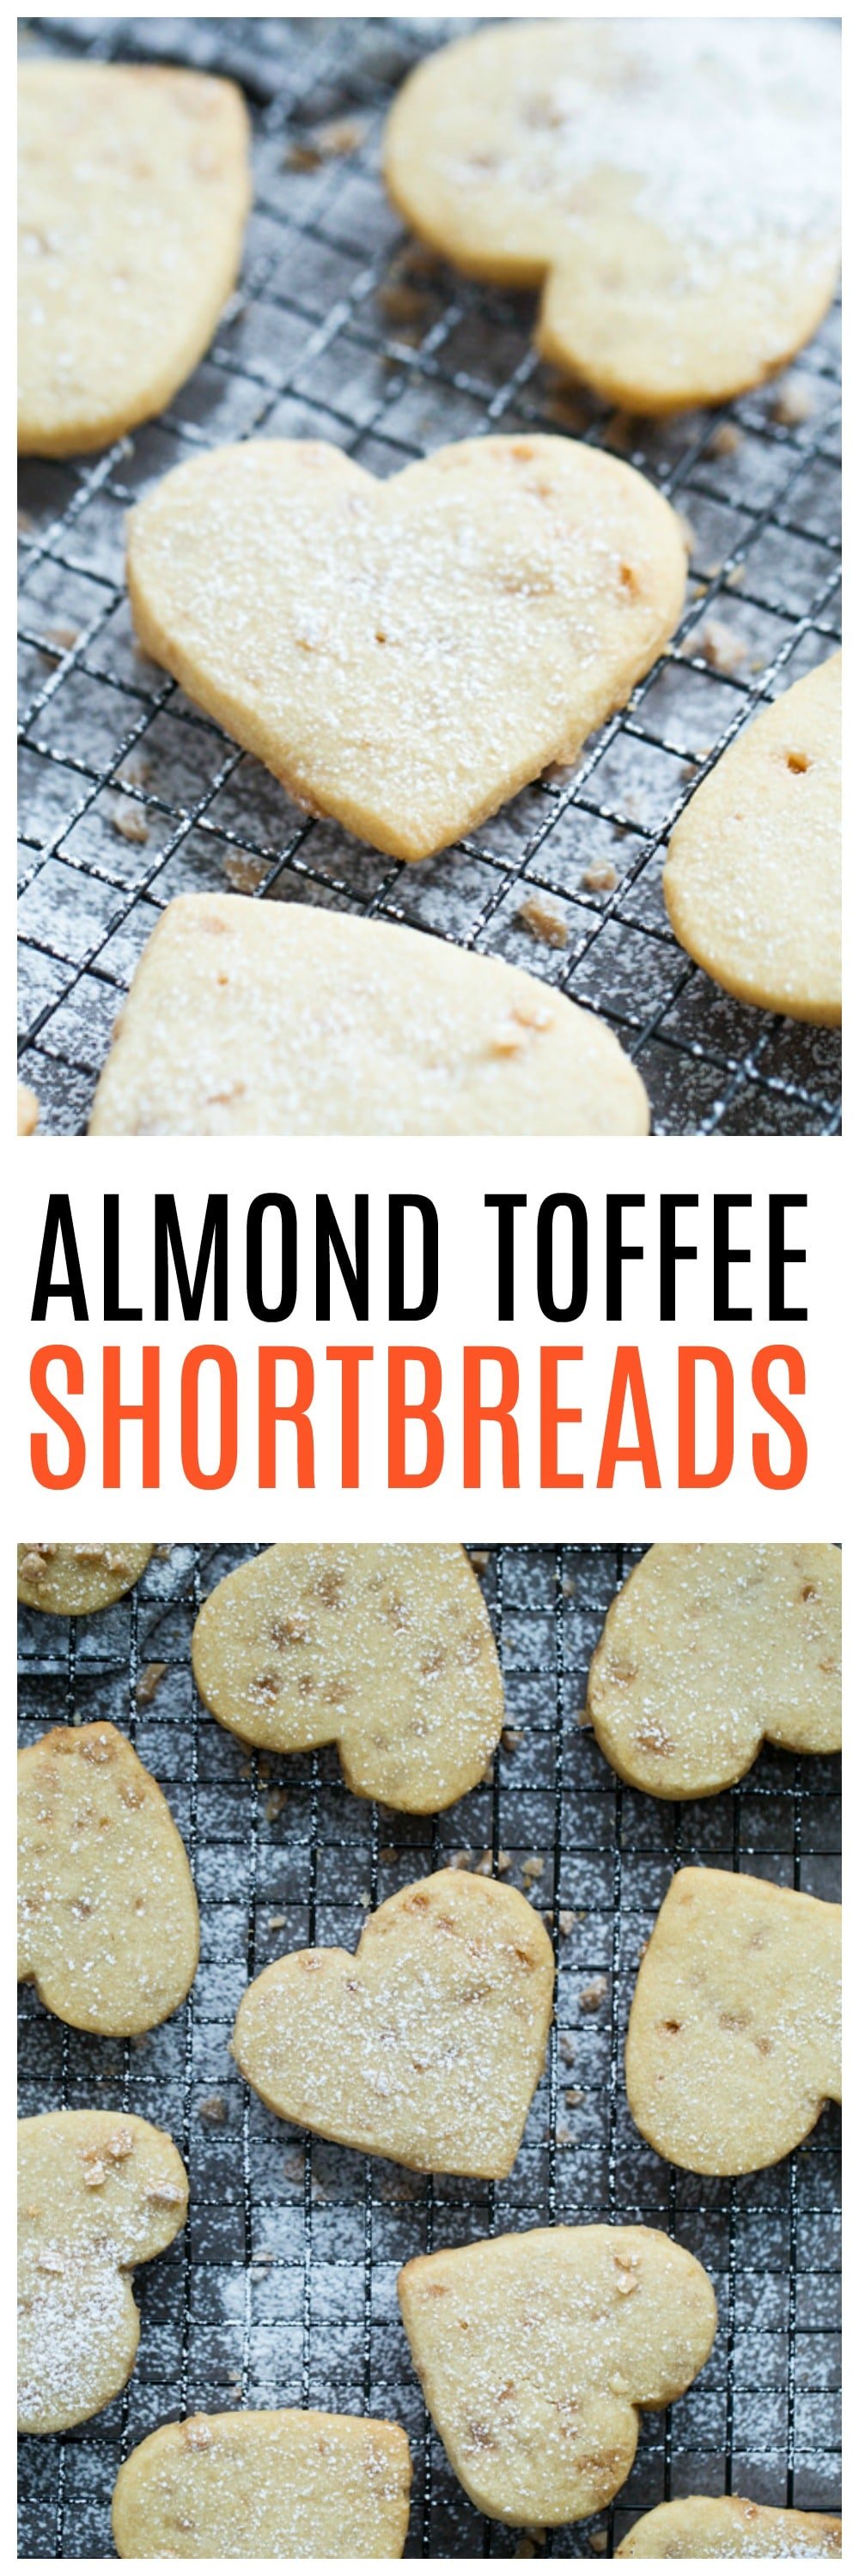 Almond Toffee Shortbread Cookies